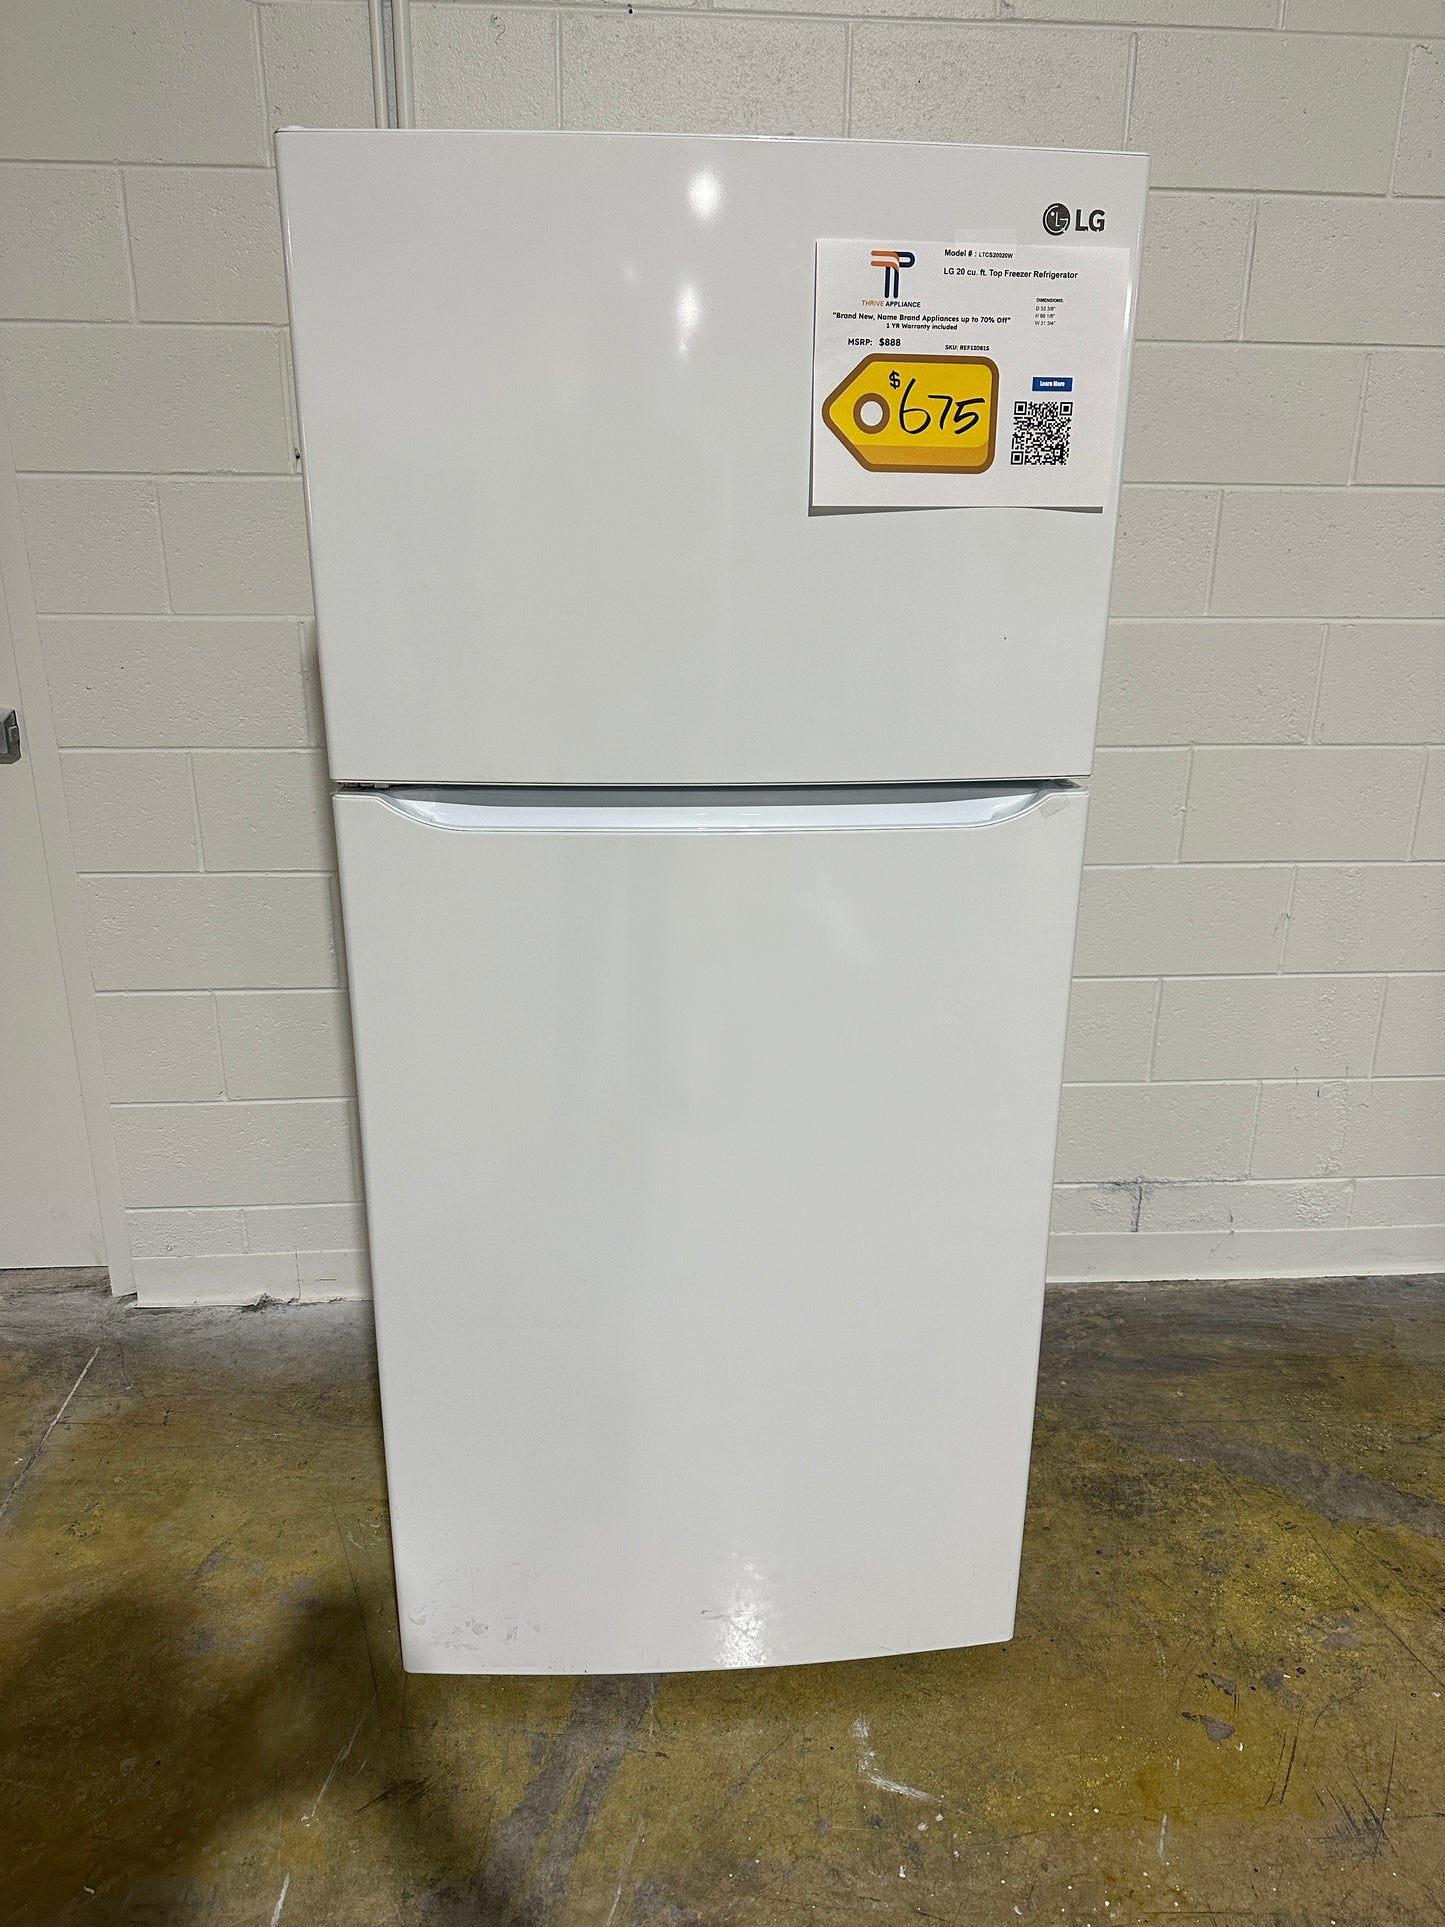 LG - 20.2 Cu. Ft. Top-Freezer Refrigerator - White  Model:LTCS20020W  REF12081S